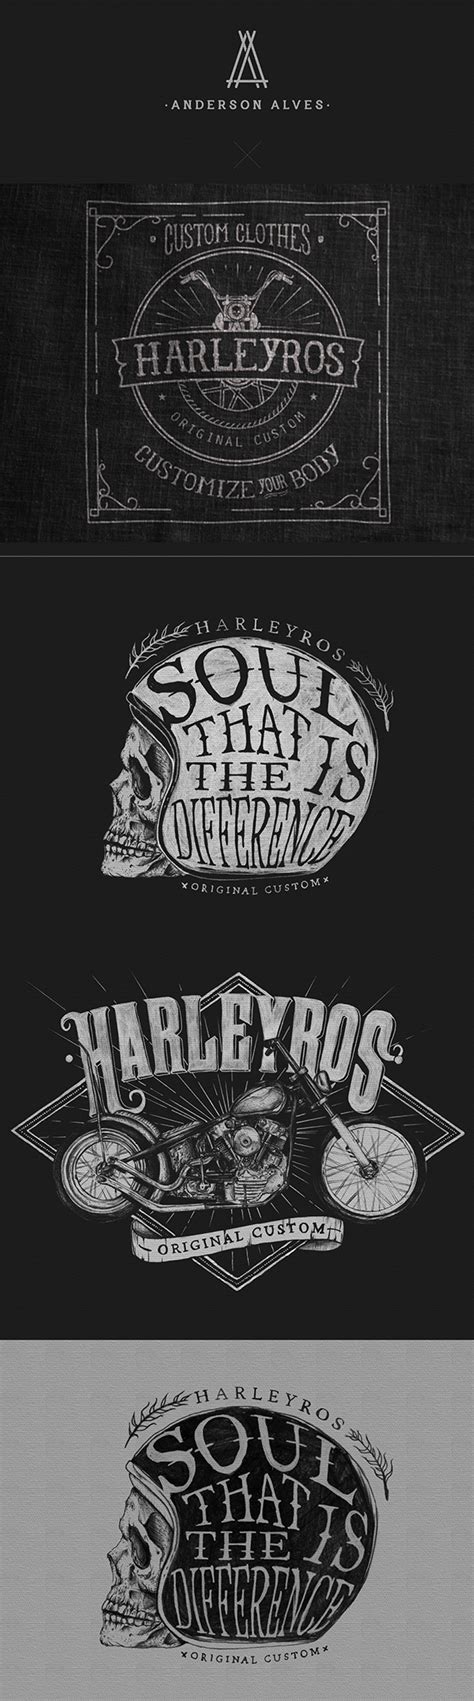 Harleyros Original Custom On Behance Vintage Typography Lettering